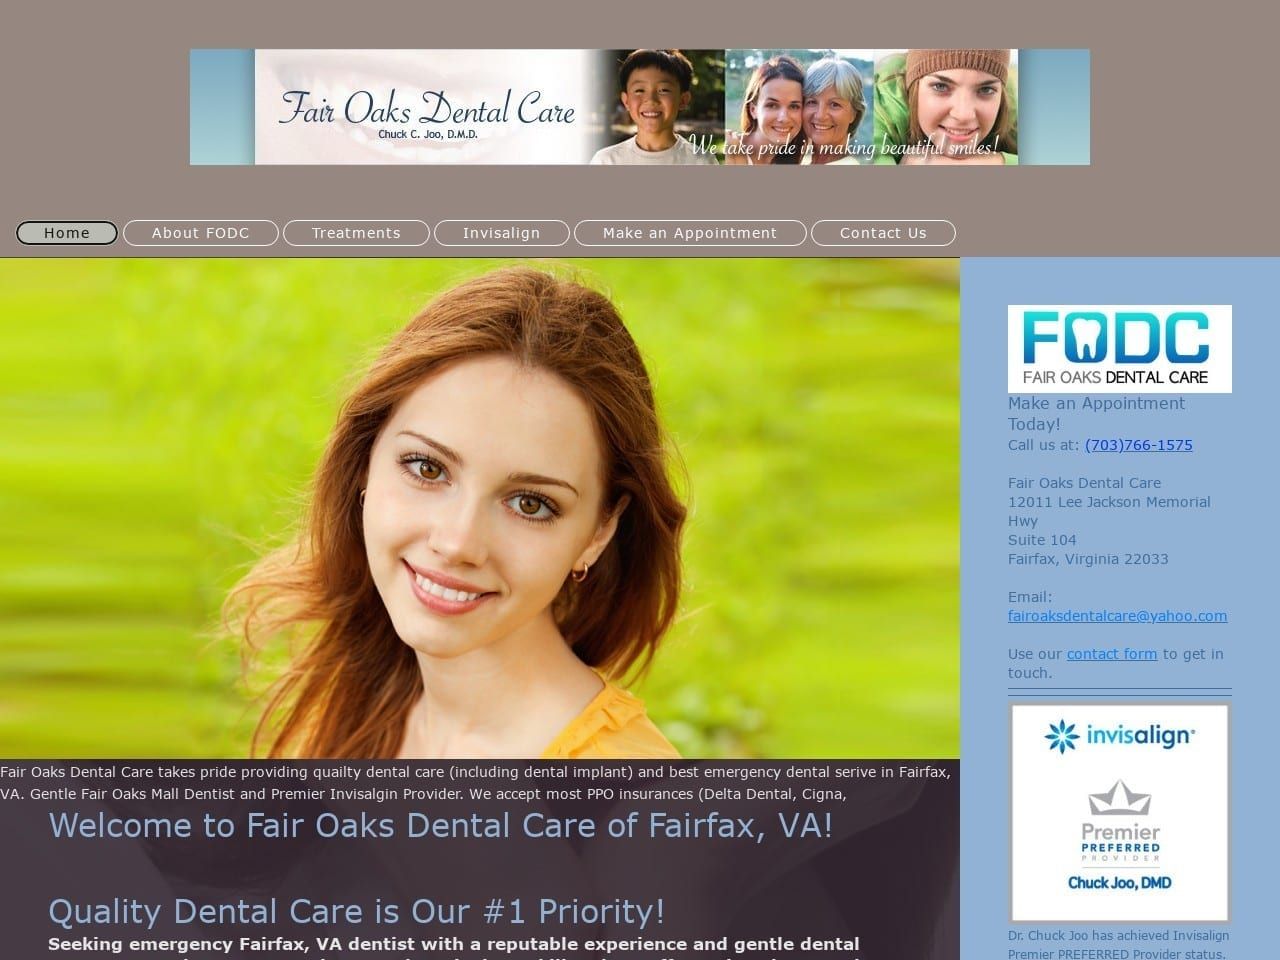 Fair Oaks Dental Care Website Screenshot from fairoaksdentalcare.com